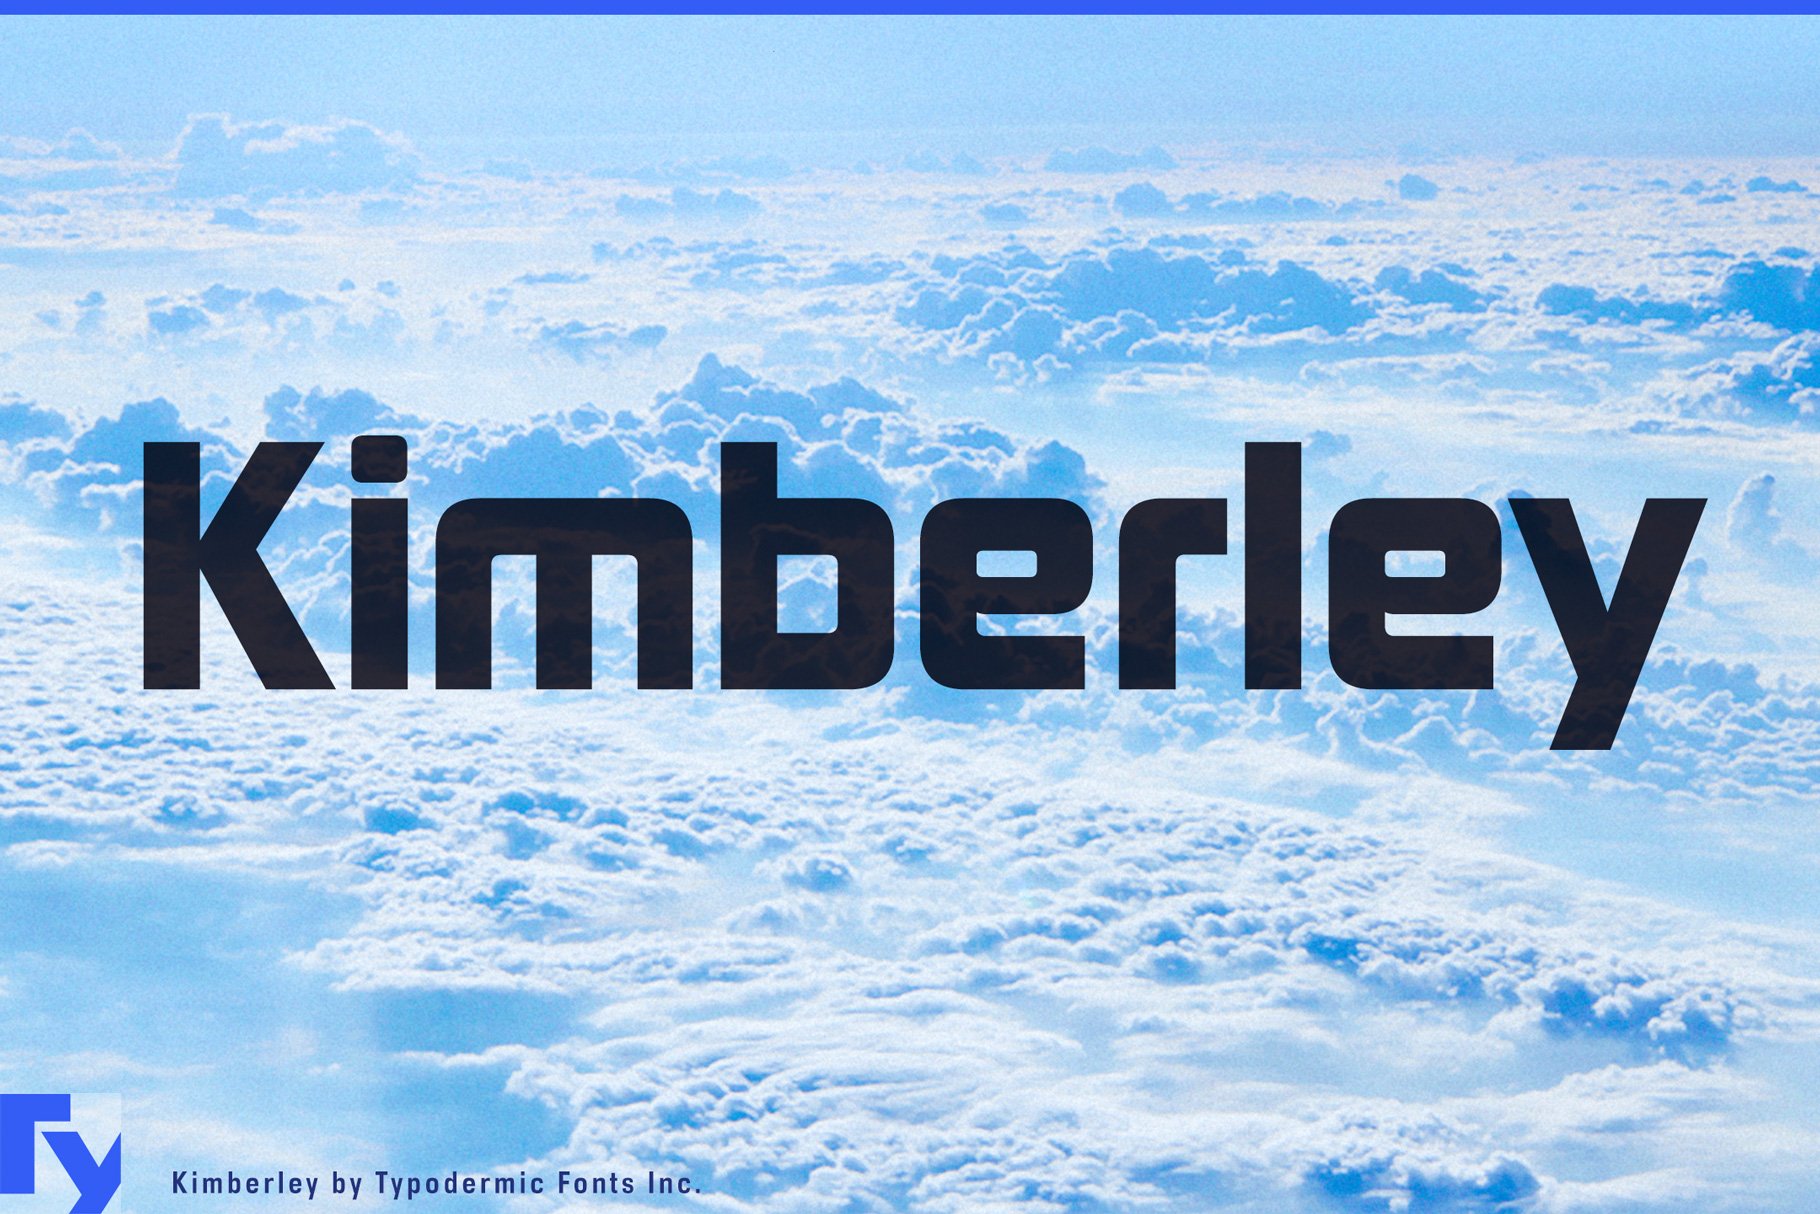 Kimberley cover image.